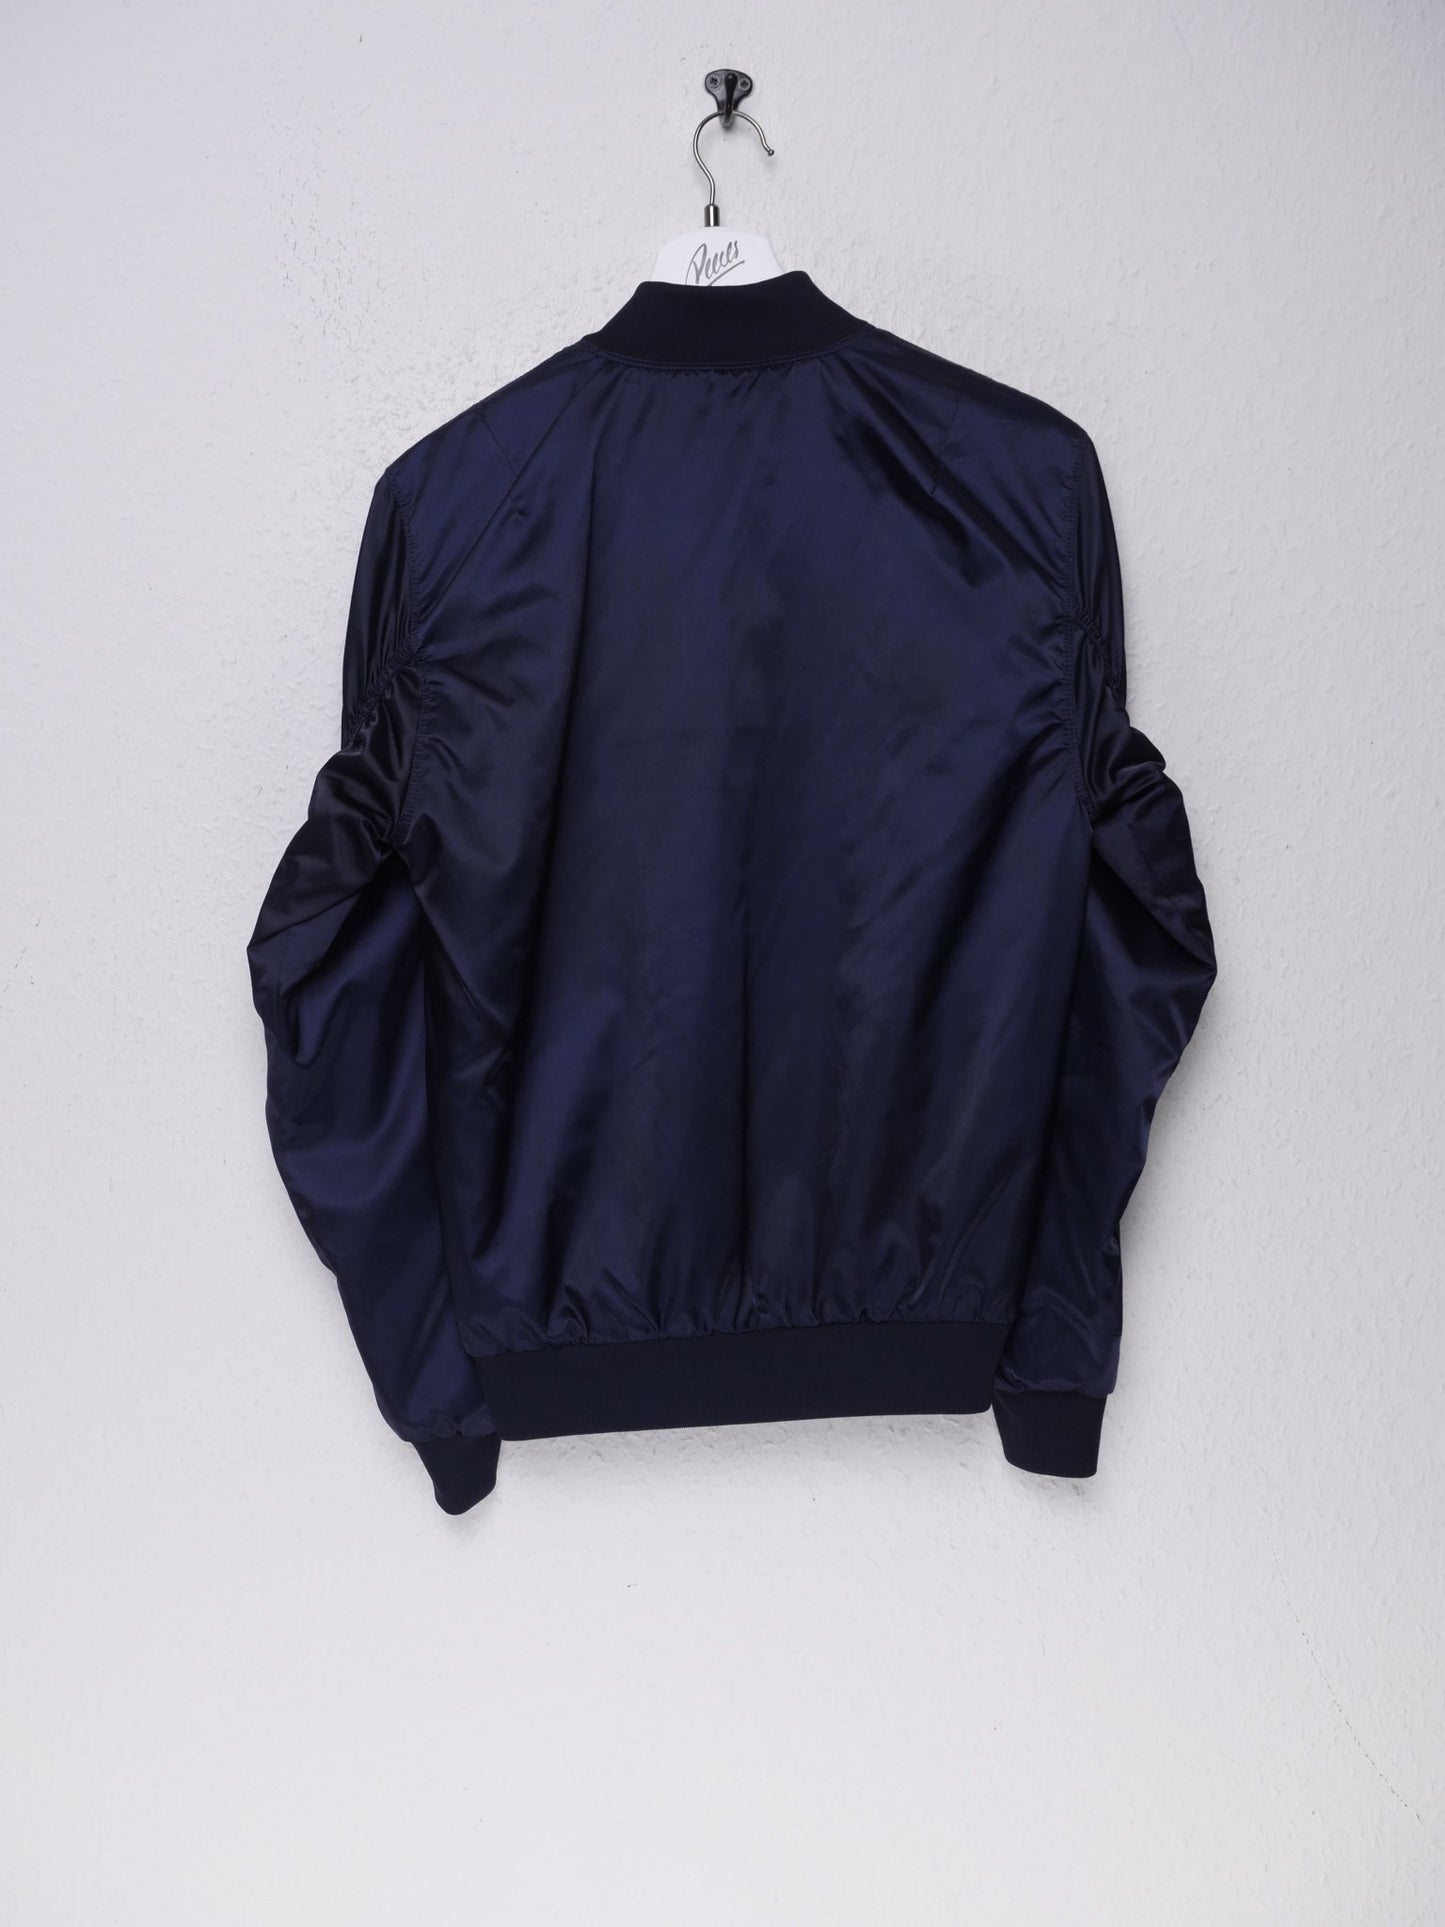 Adidas embroidered Logo navy College Jacket - Peeces